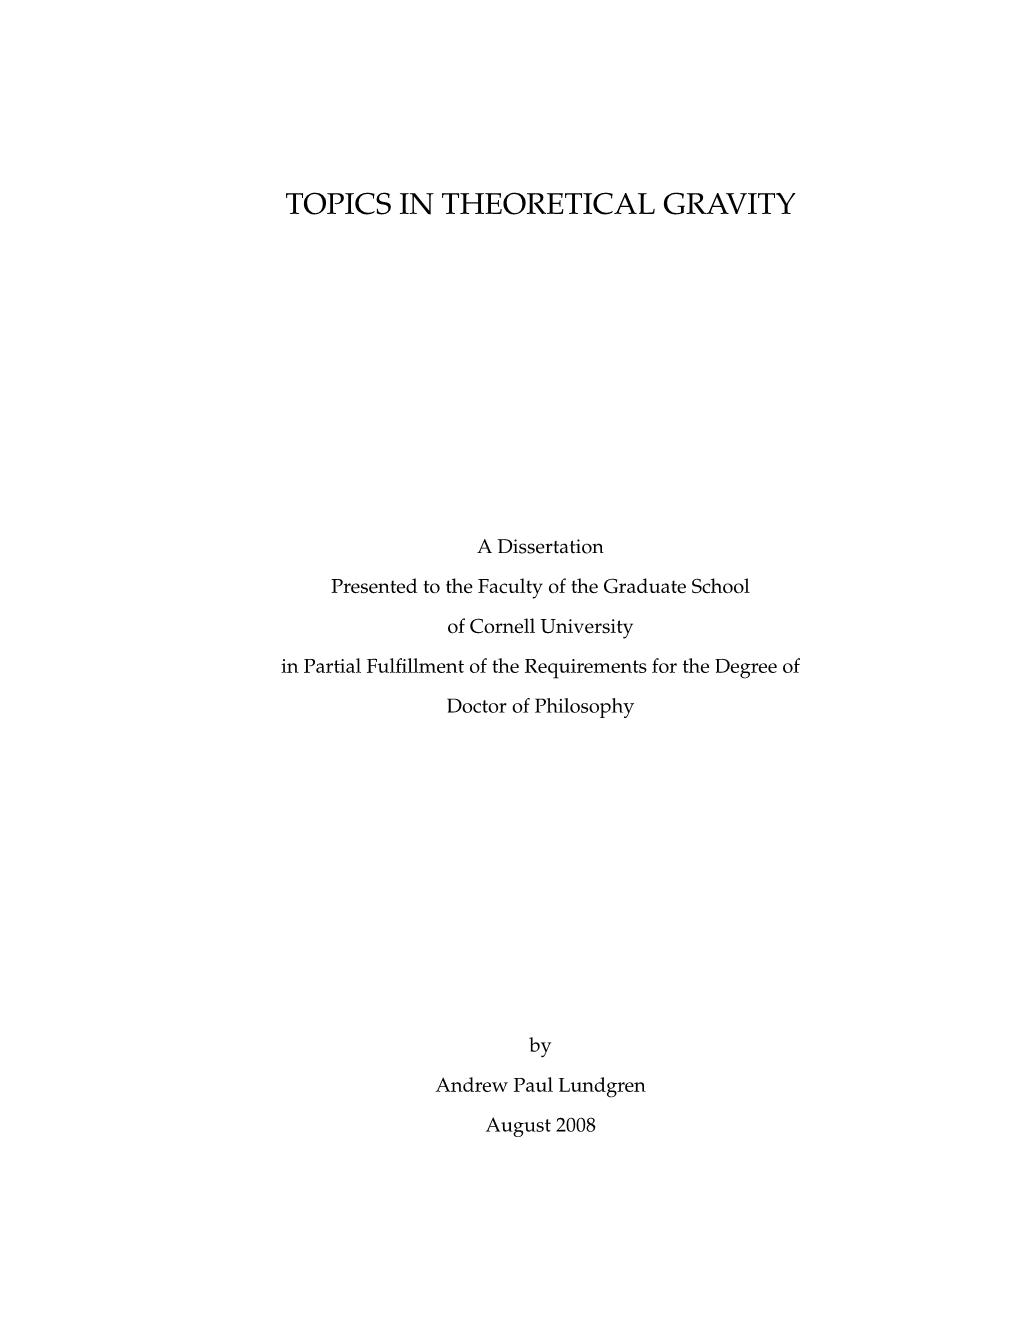 Topics in Theoretical Gravity